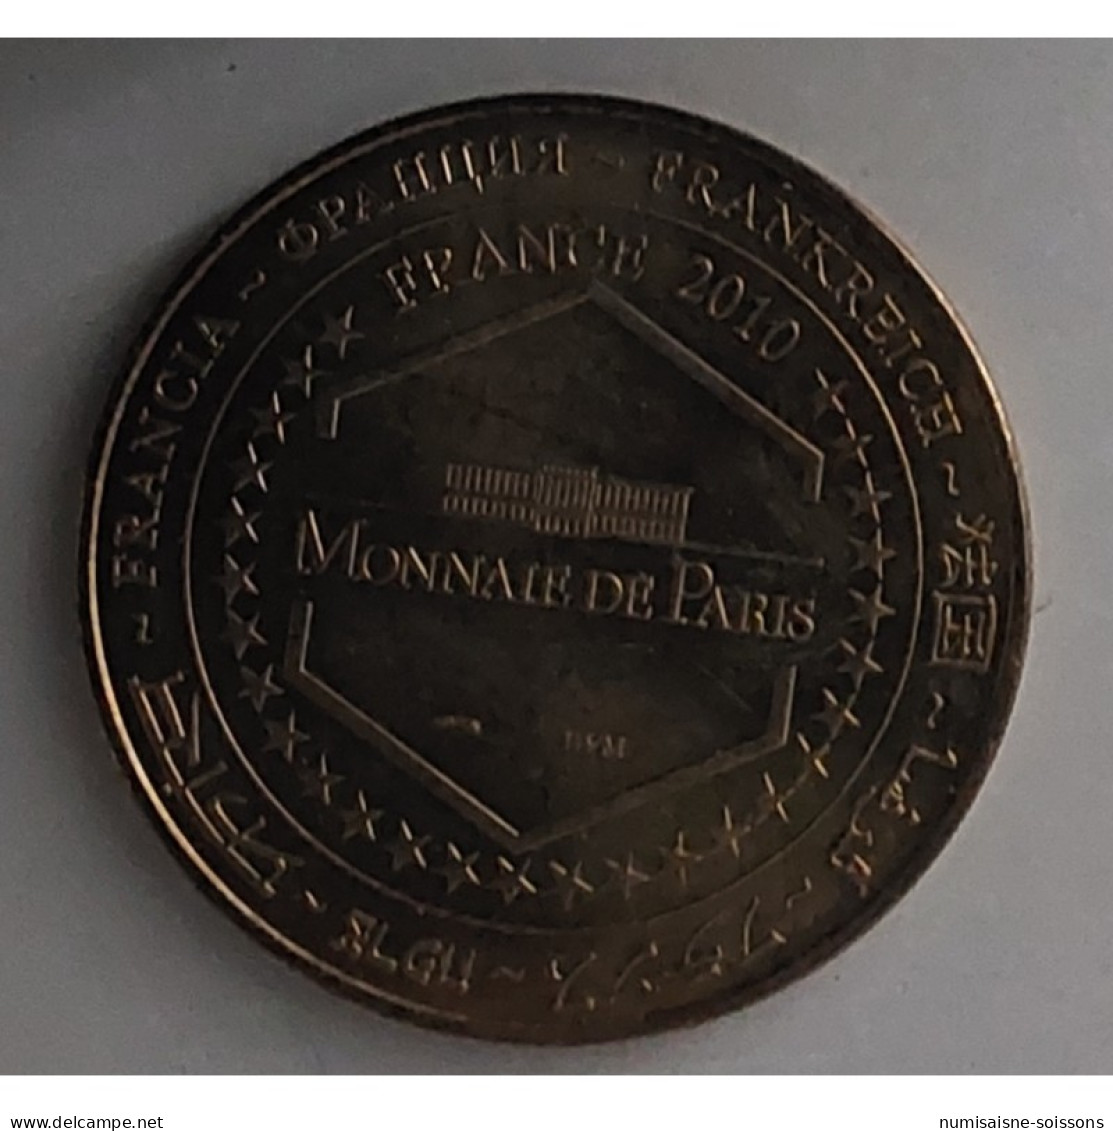 86 - JAUNAY CLAN - PARC DU FUTUROSCOPE - Monnaie De Paris - 2010 - 2010